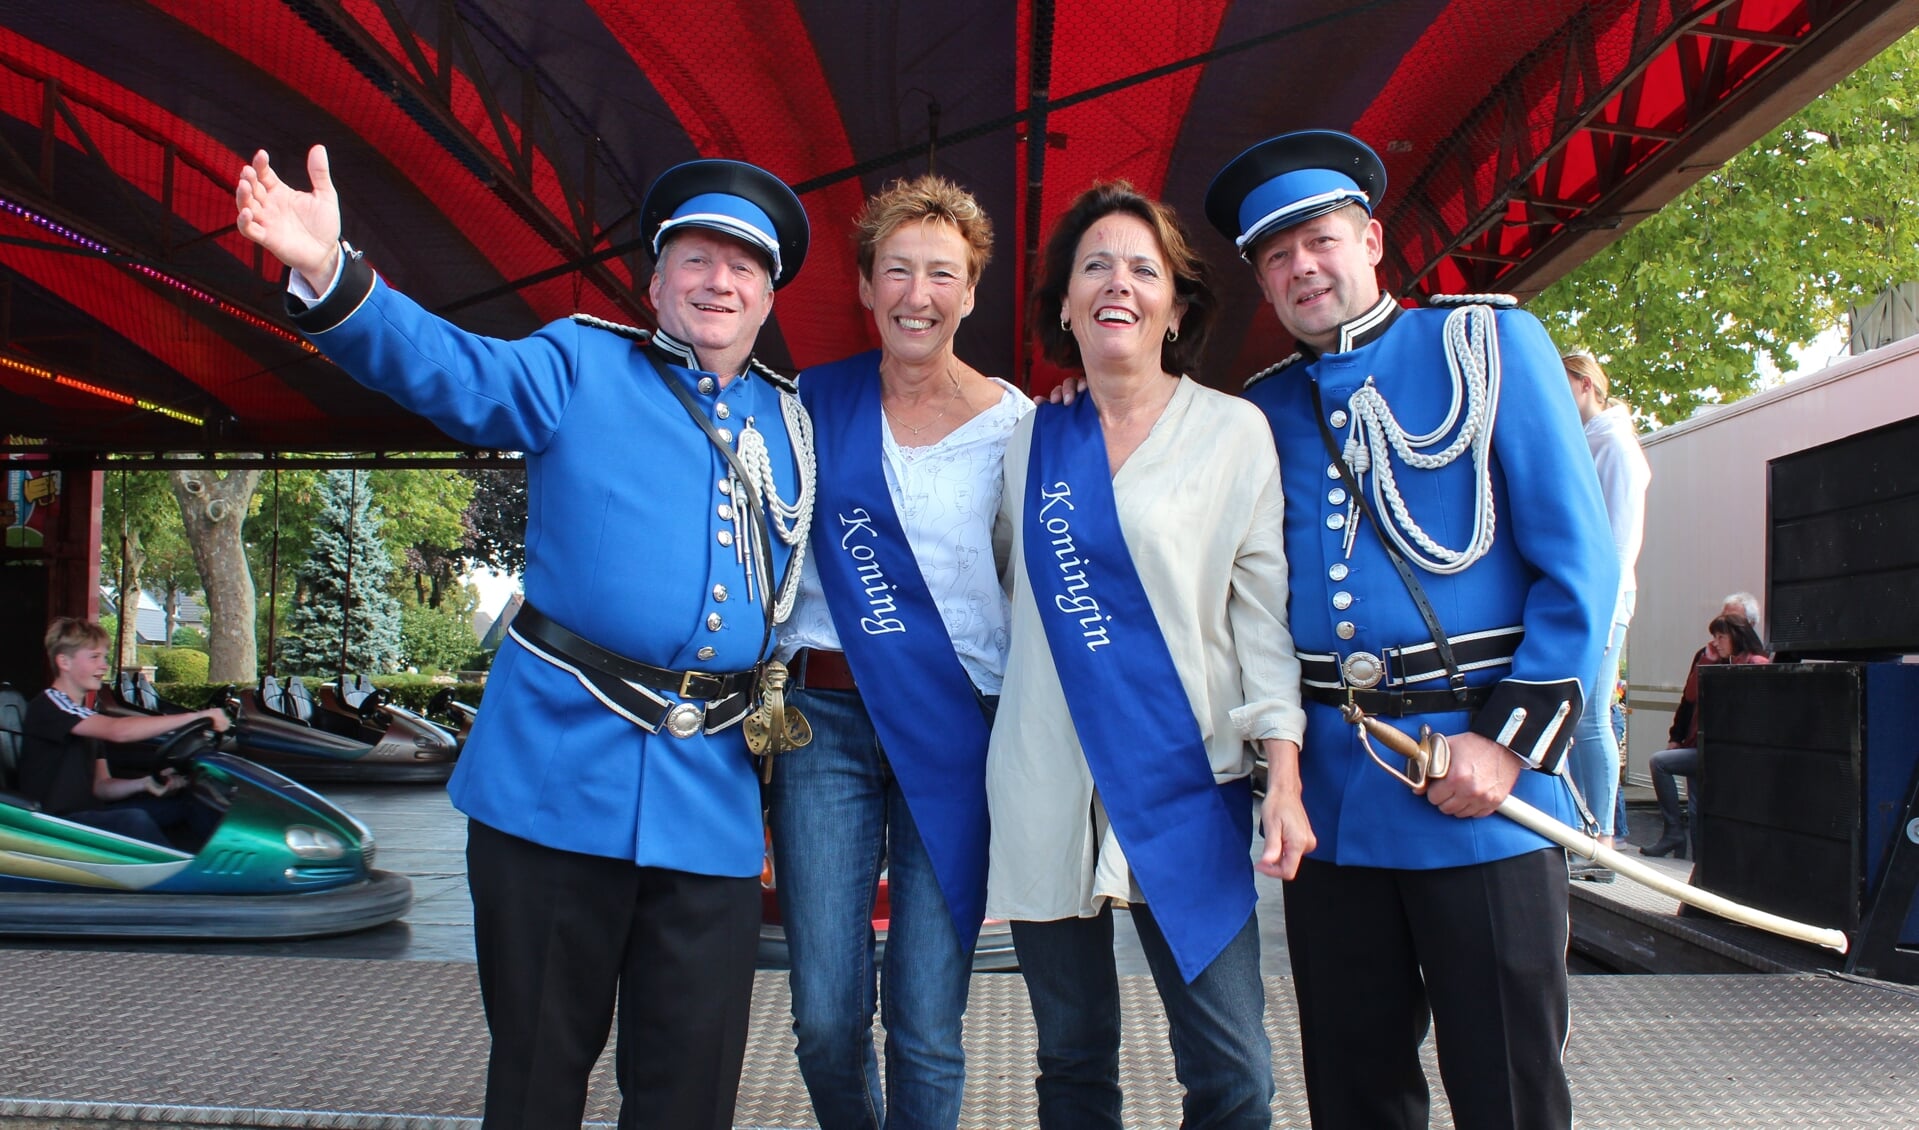 Bernadette Kemperman (midden links) is Schutterskoning van Drempt, Elly Geurts mag de titel Koningin dragen. Foto: Kermiscomité Drempt